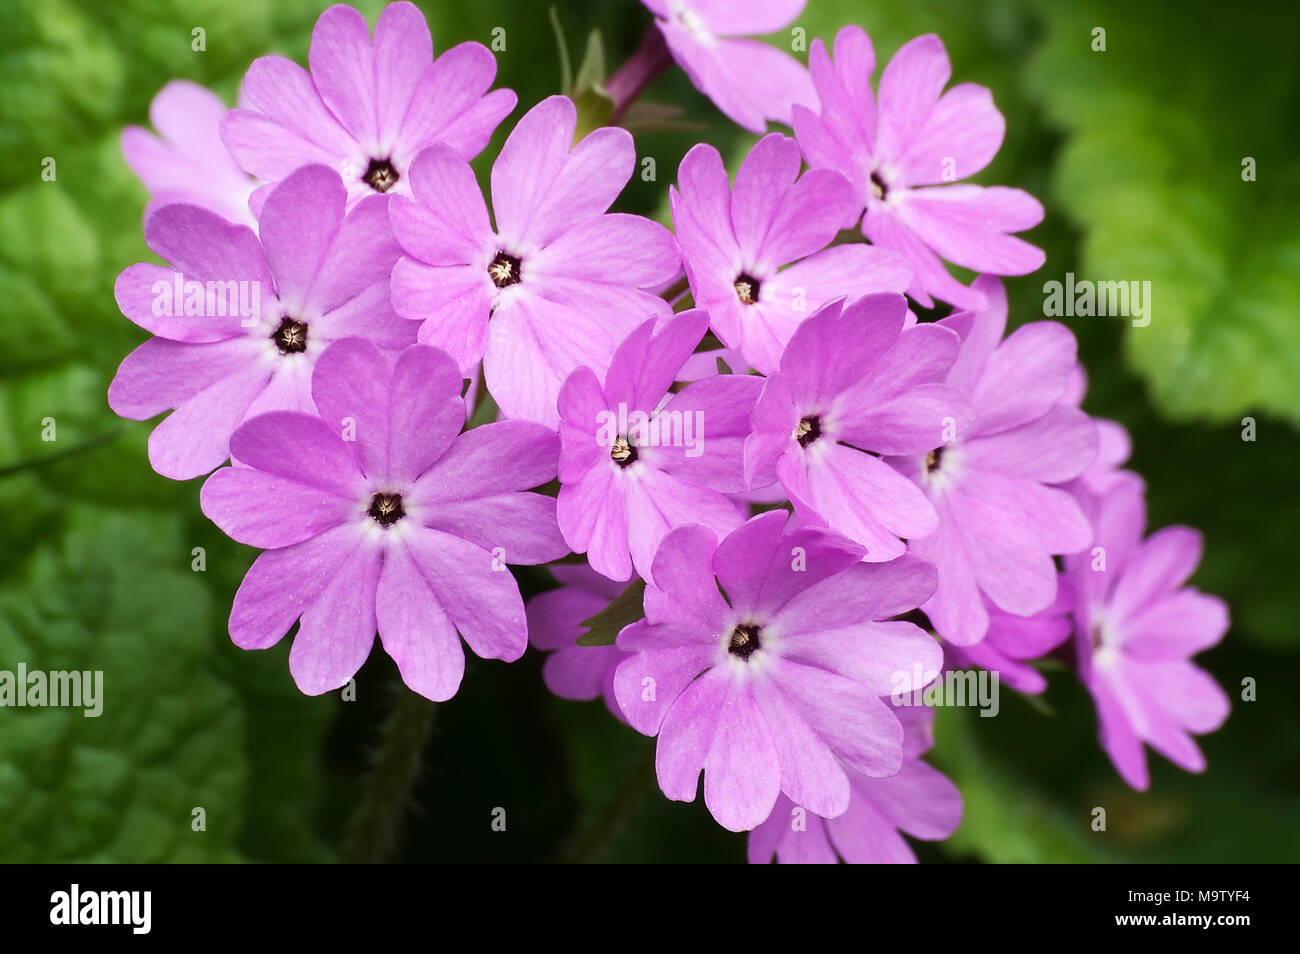 Japanese primrose (Primula sieboldii). Known also as Asiatic primrose and Cortusoides primula. Another scientific name is Primula patens. Stock Photo